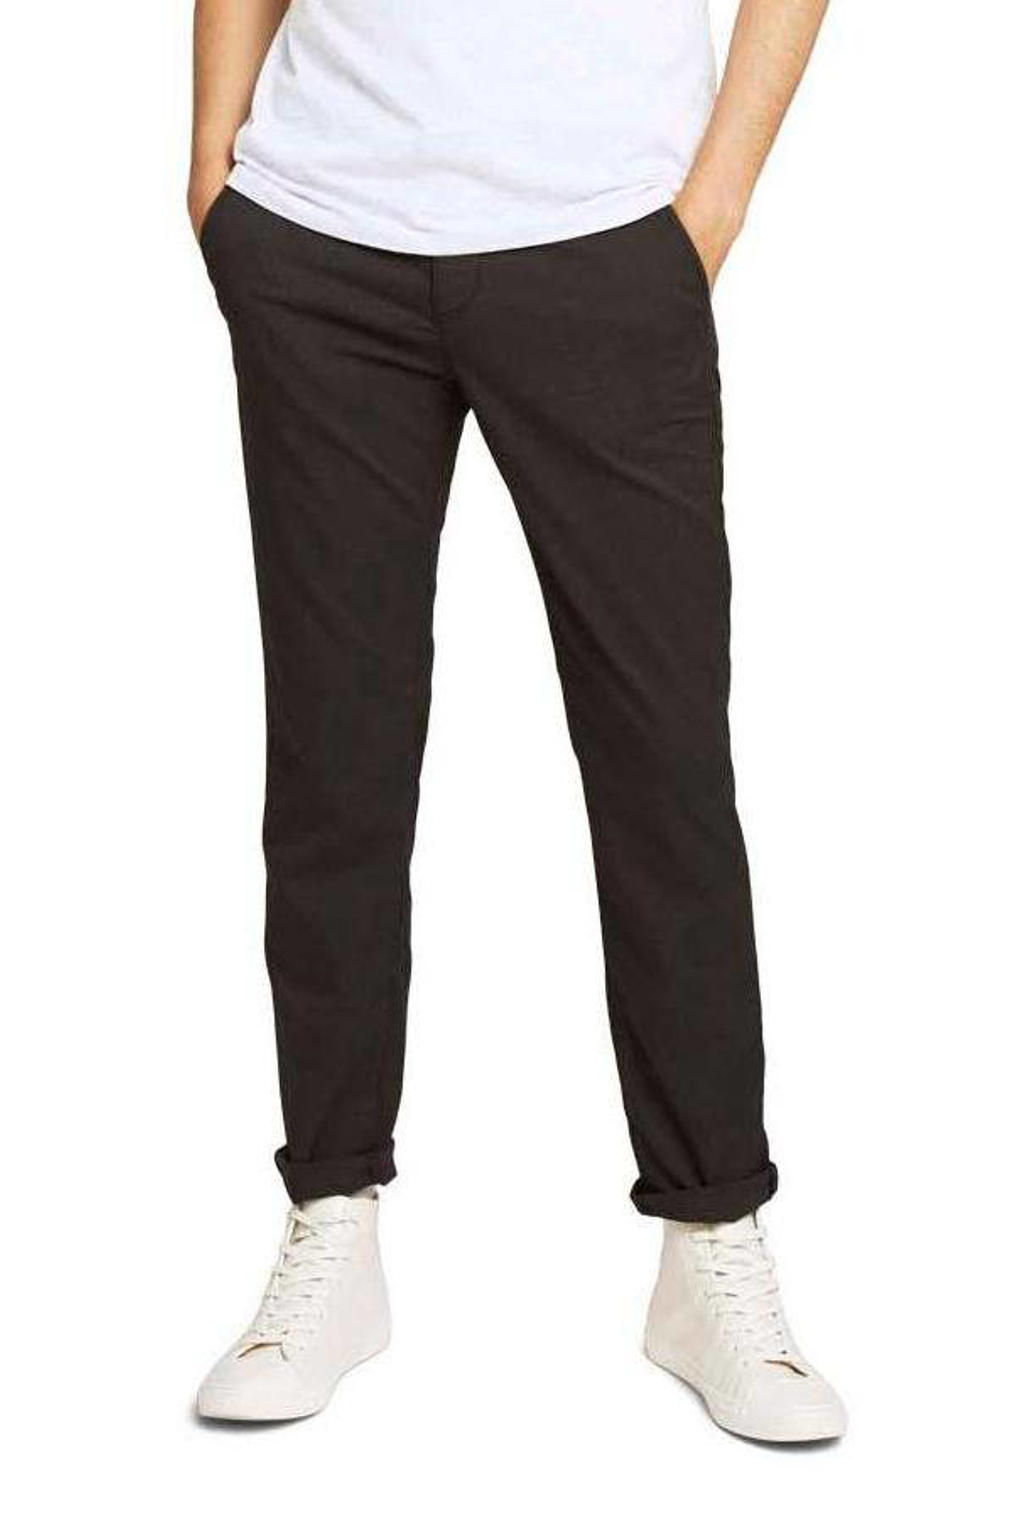 Tom Tailor Denim geruite straight fit broek antraciet/zwart